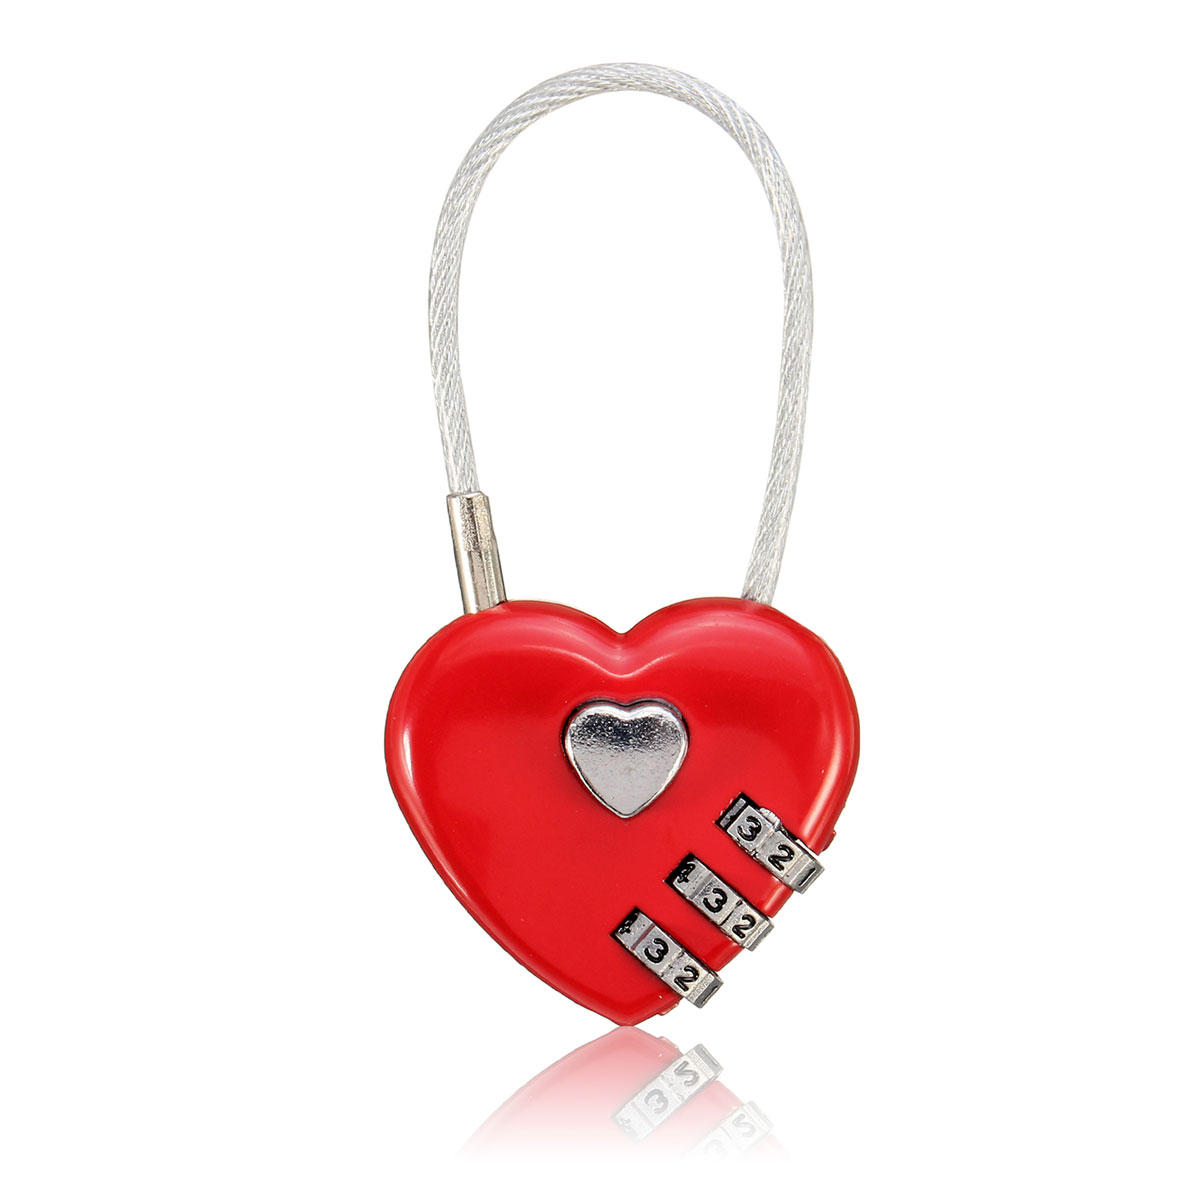 Creative Gift Idea Love Lock Personalised Engraved Padlock Heart Shaped Lock Decorations